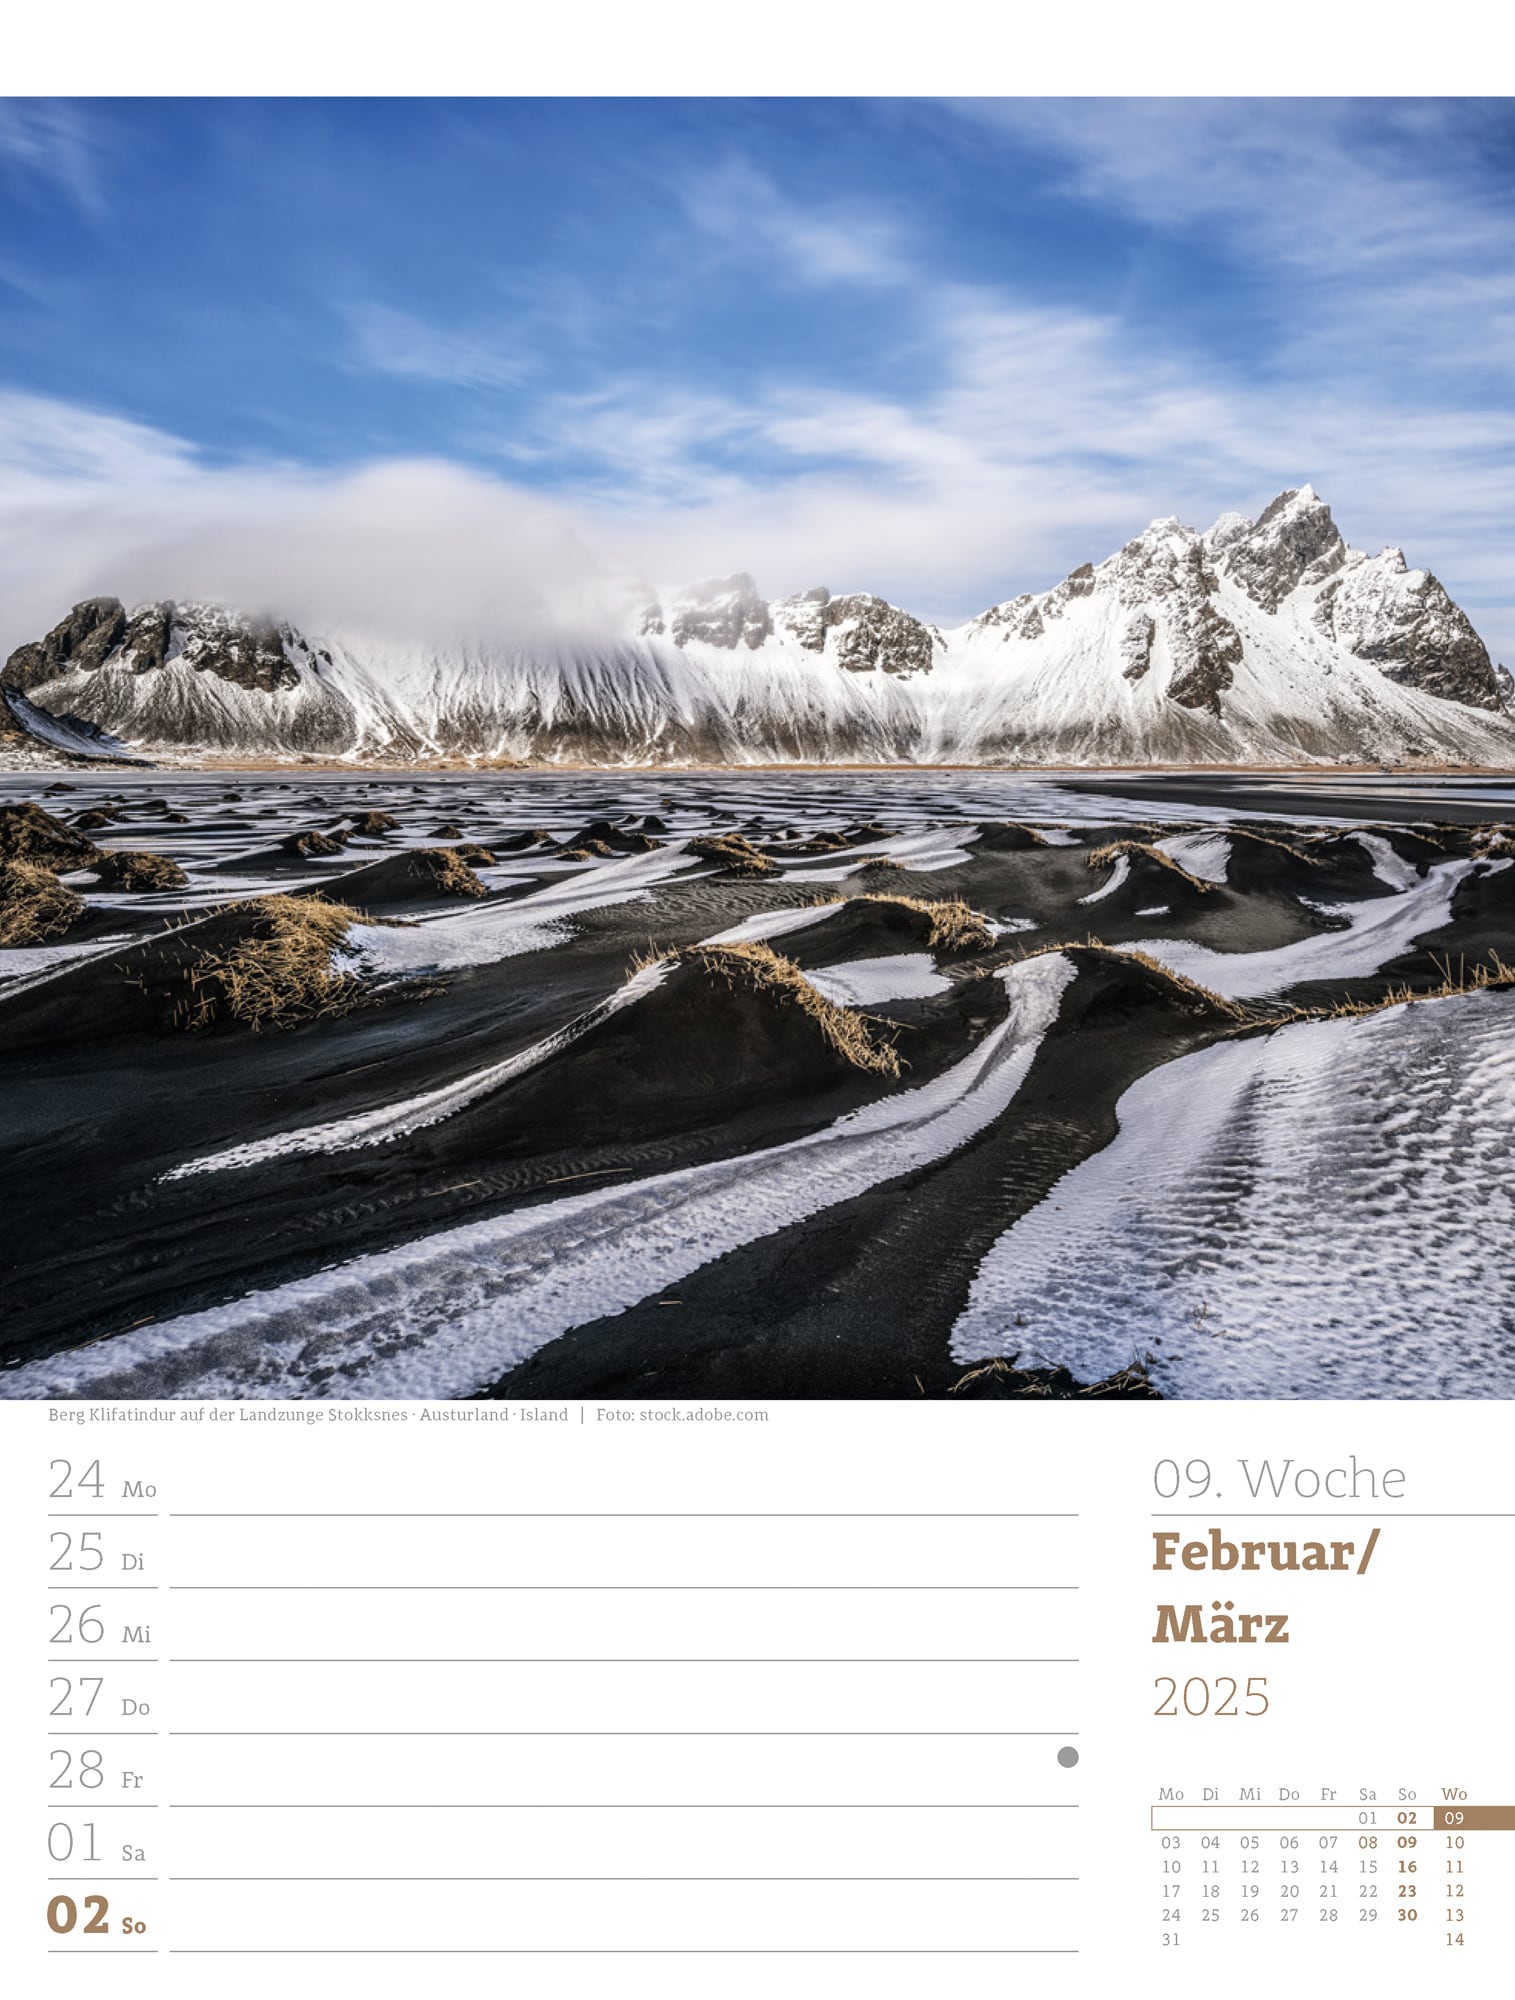 Ackermann Calendar Travel the World 2025 - Weekly Planner - Inside View 12